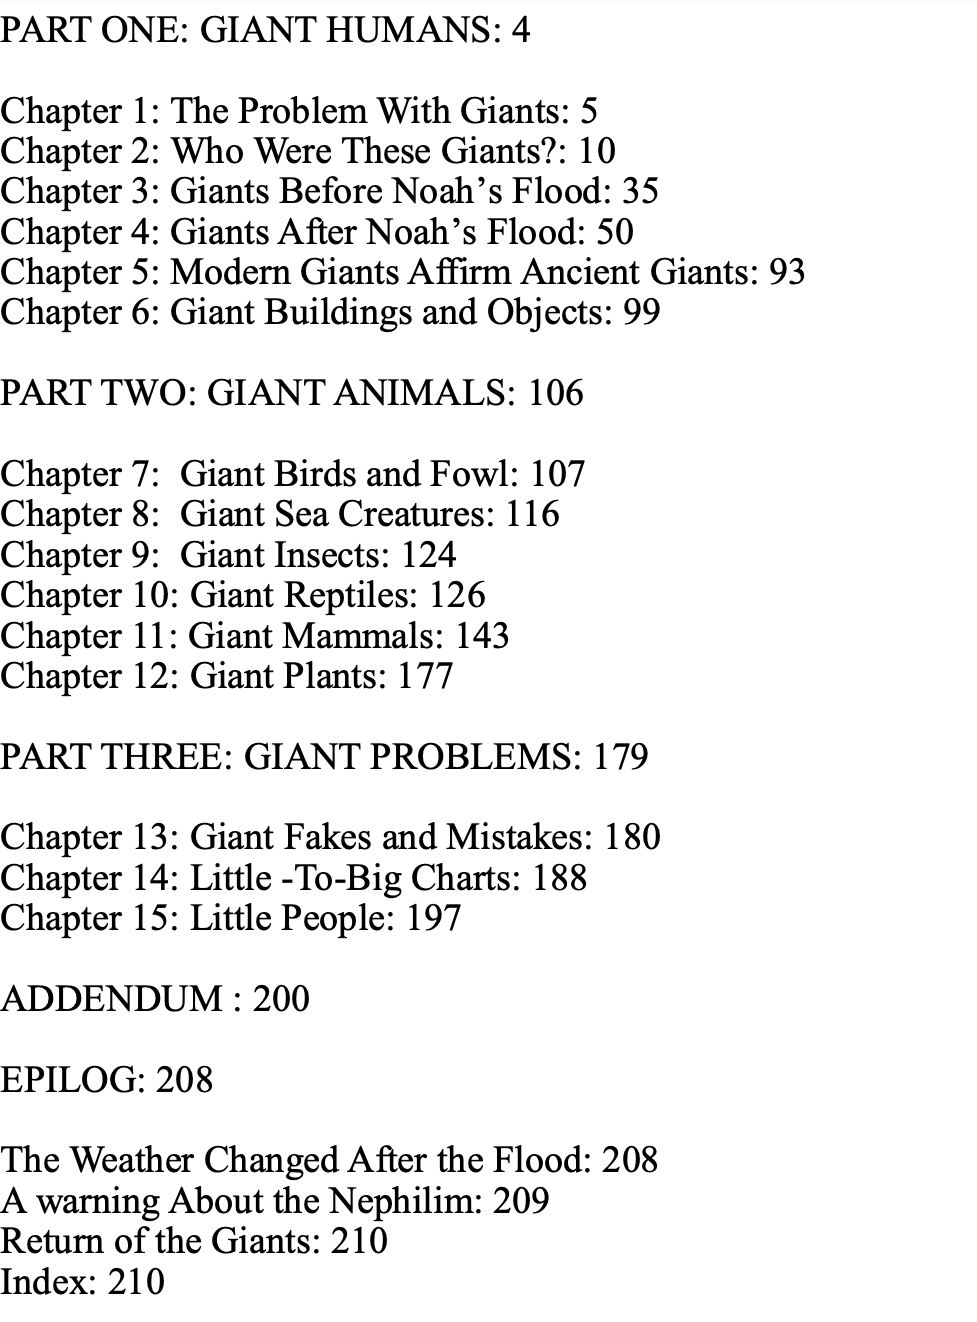 Giants Against Evolution eBook (Digital)